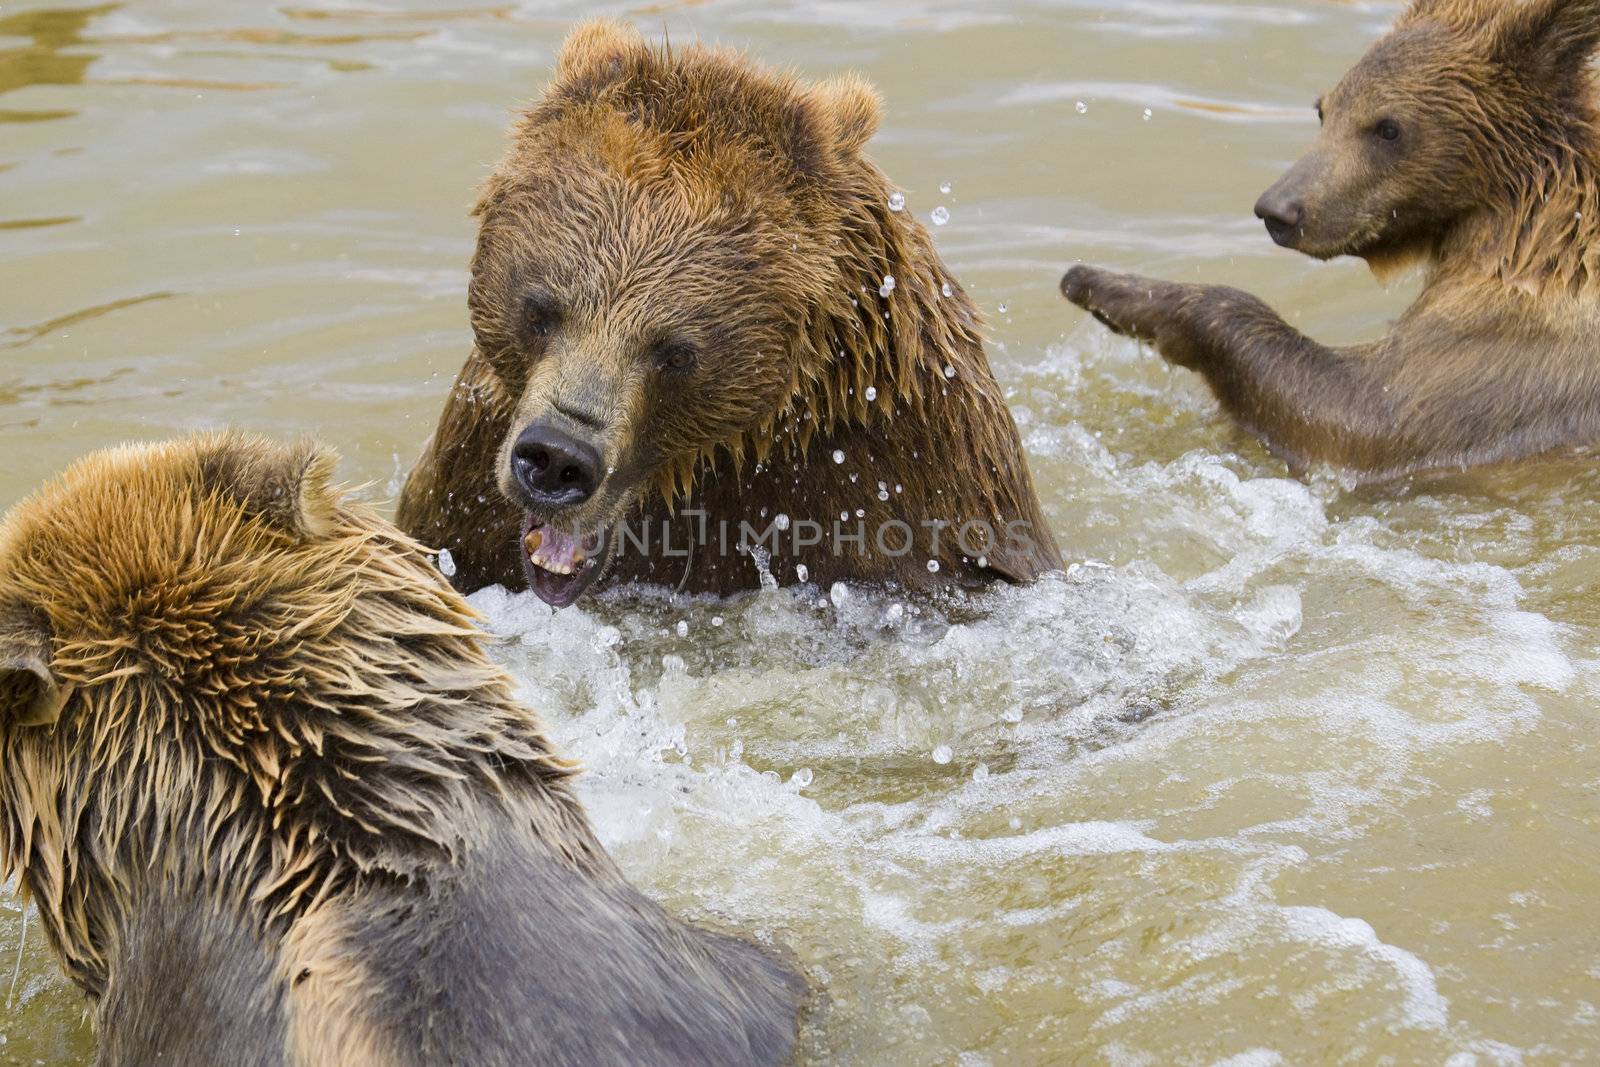 Brown Bears Fighting in the Water